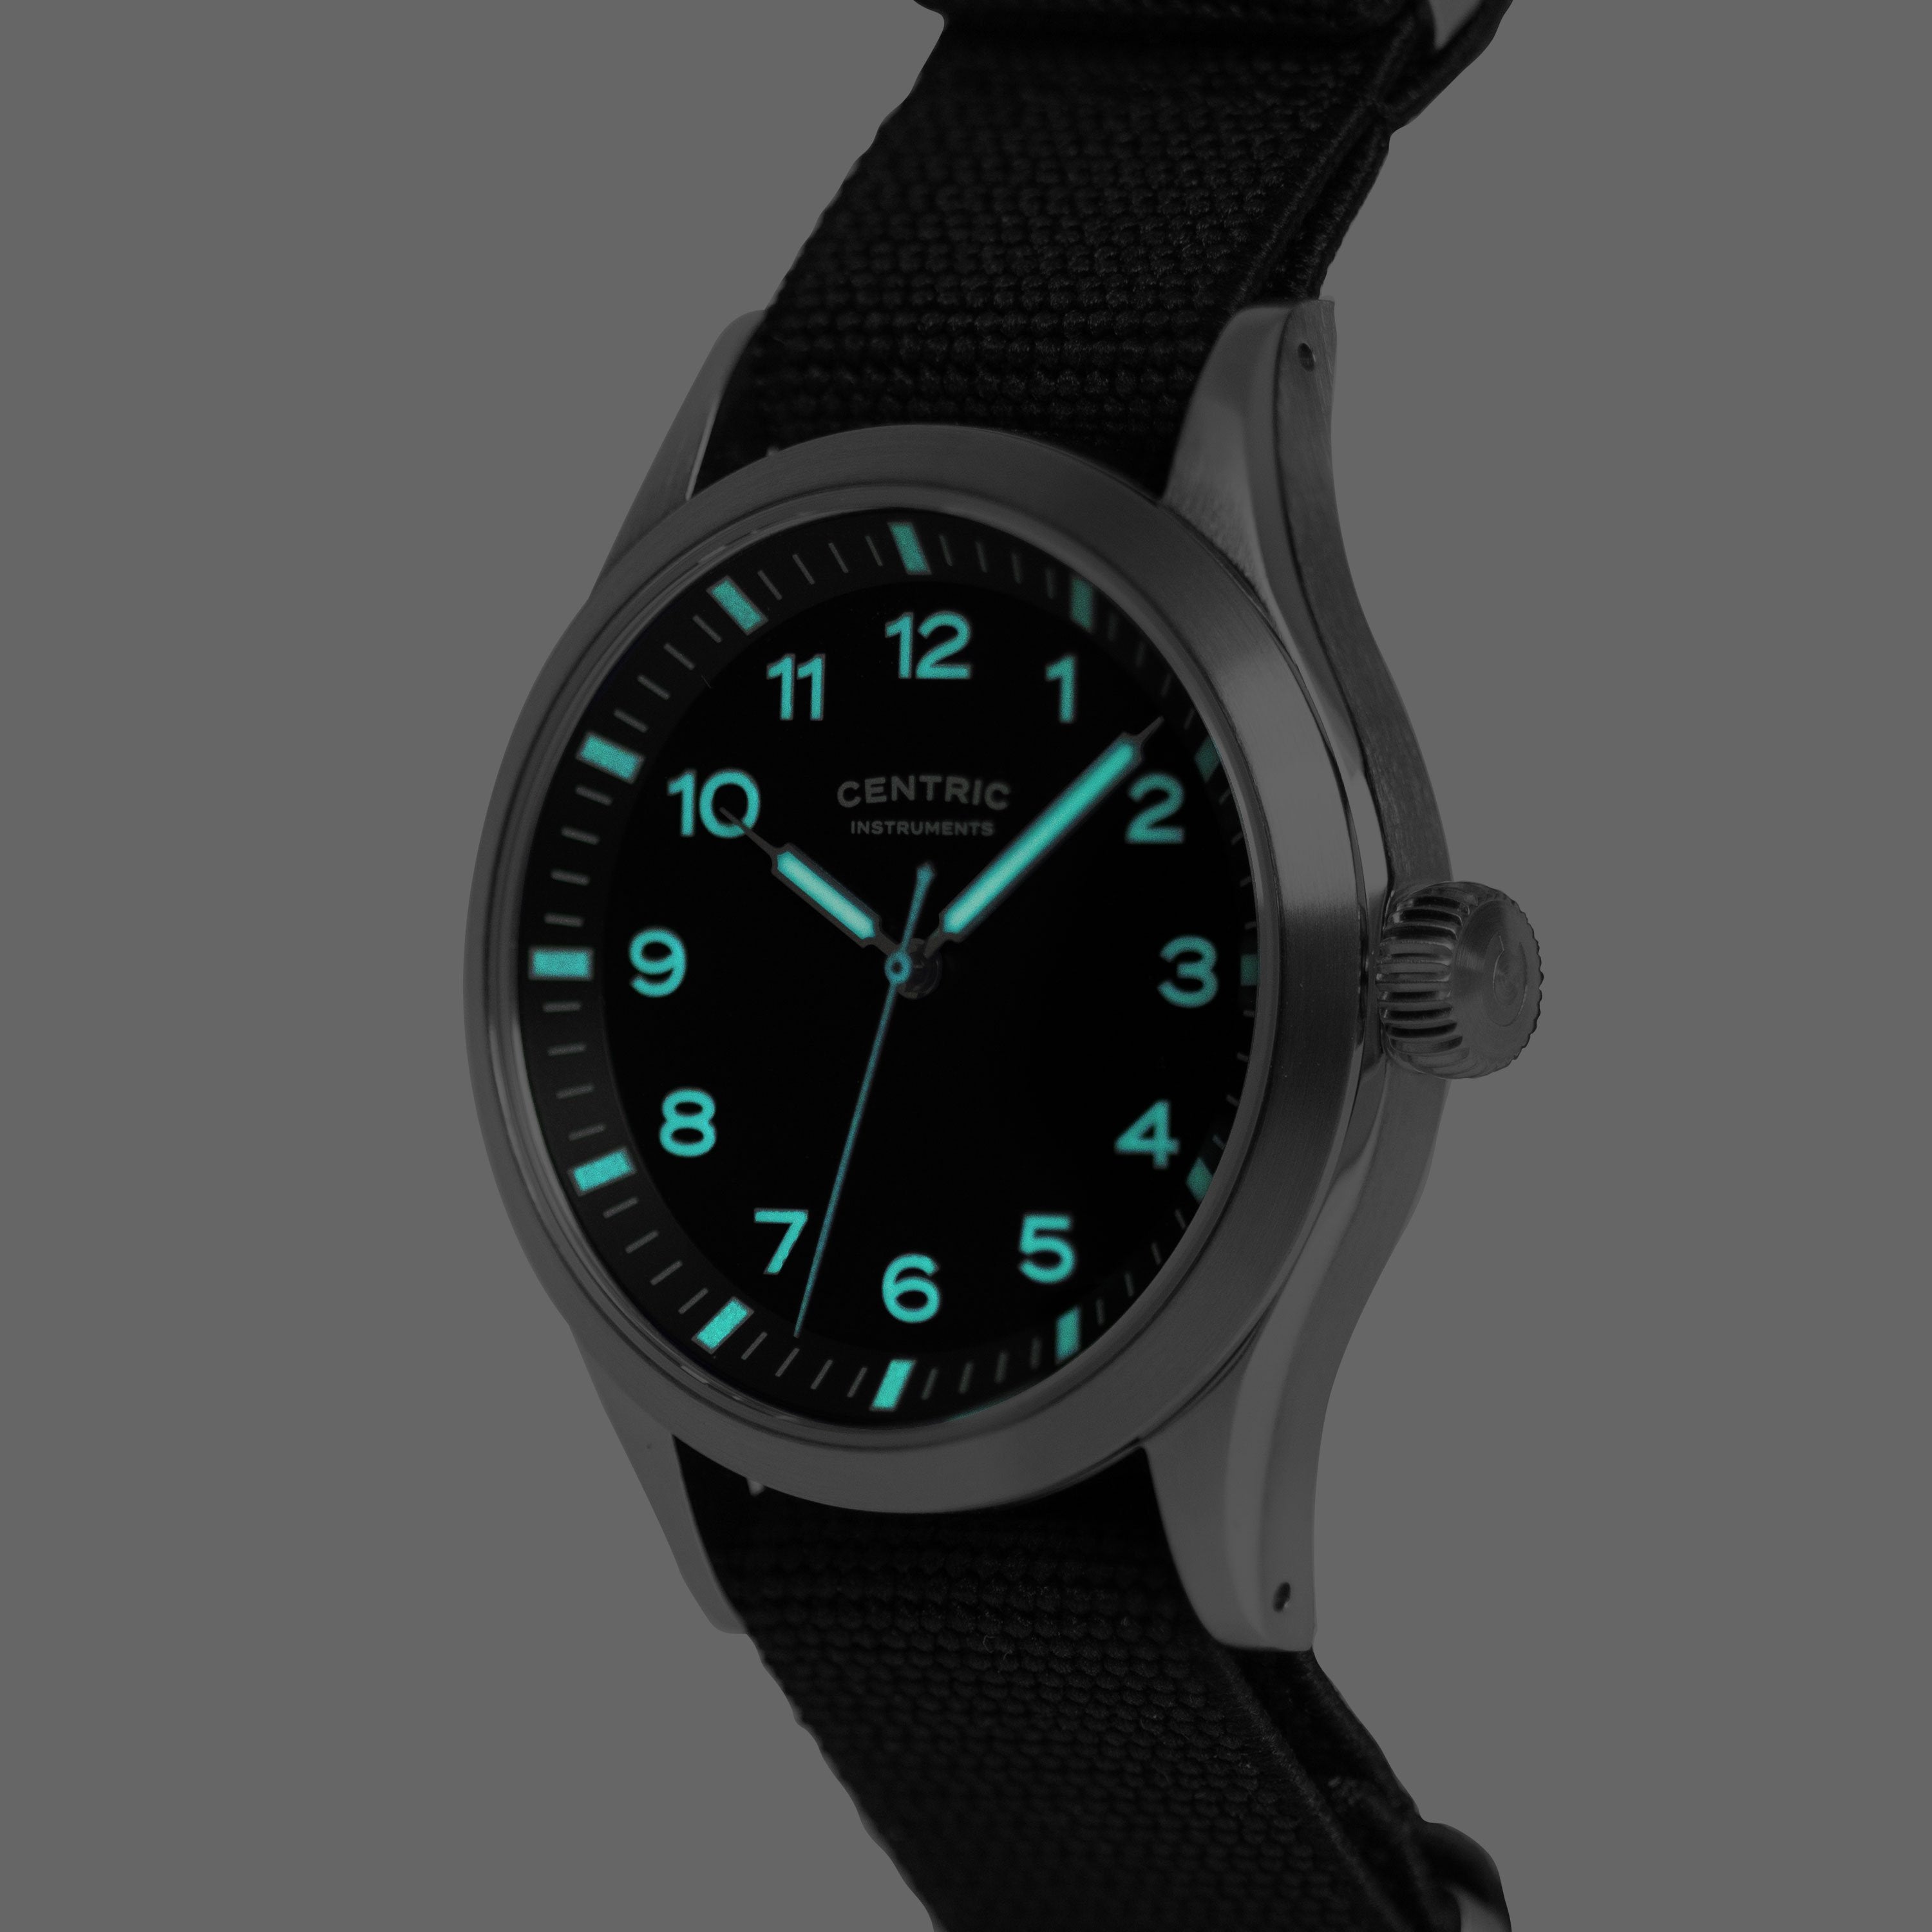 Field Watch MkIII Standard (Vintage Black) - Leather